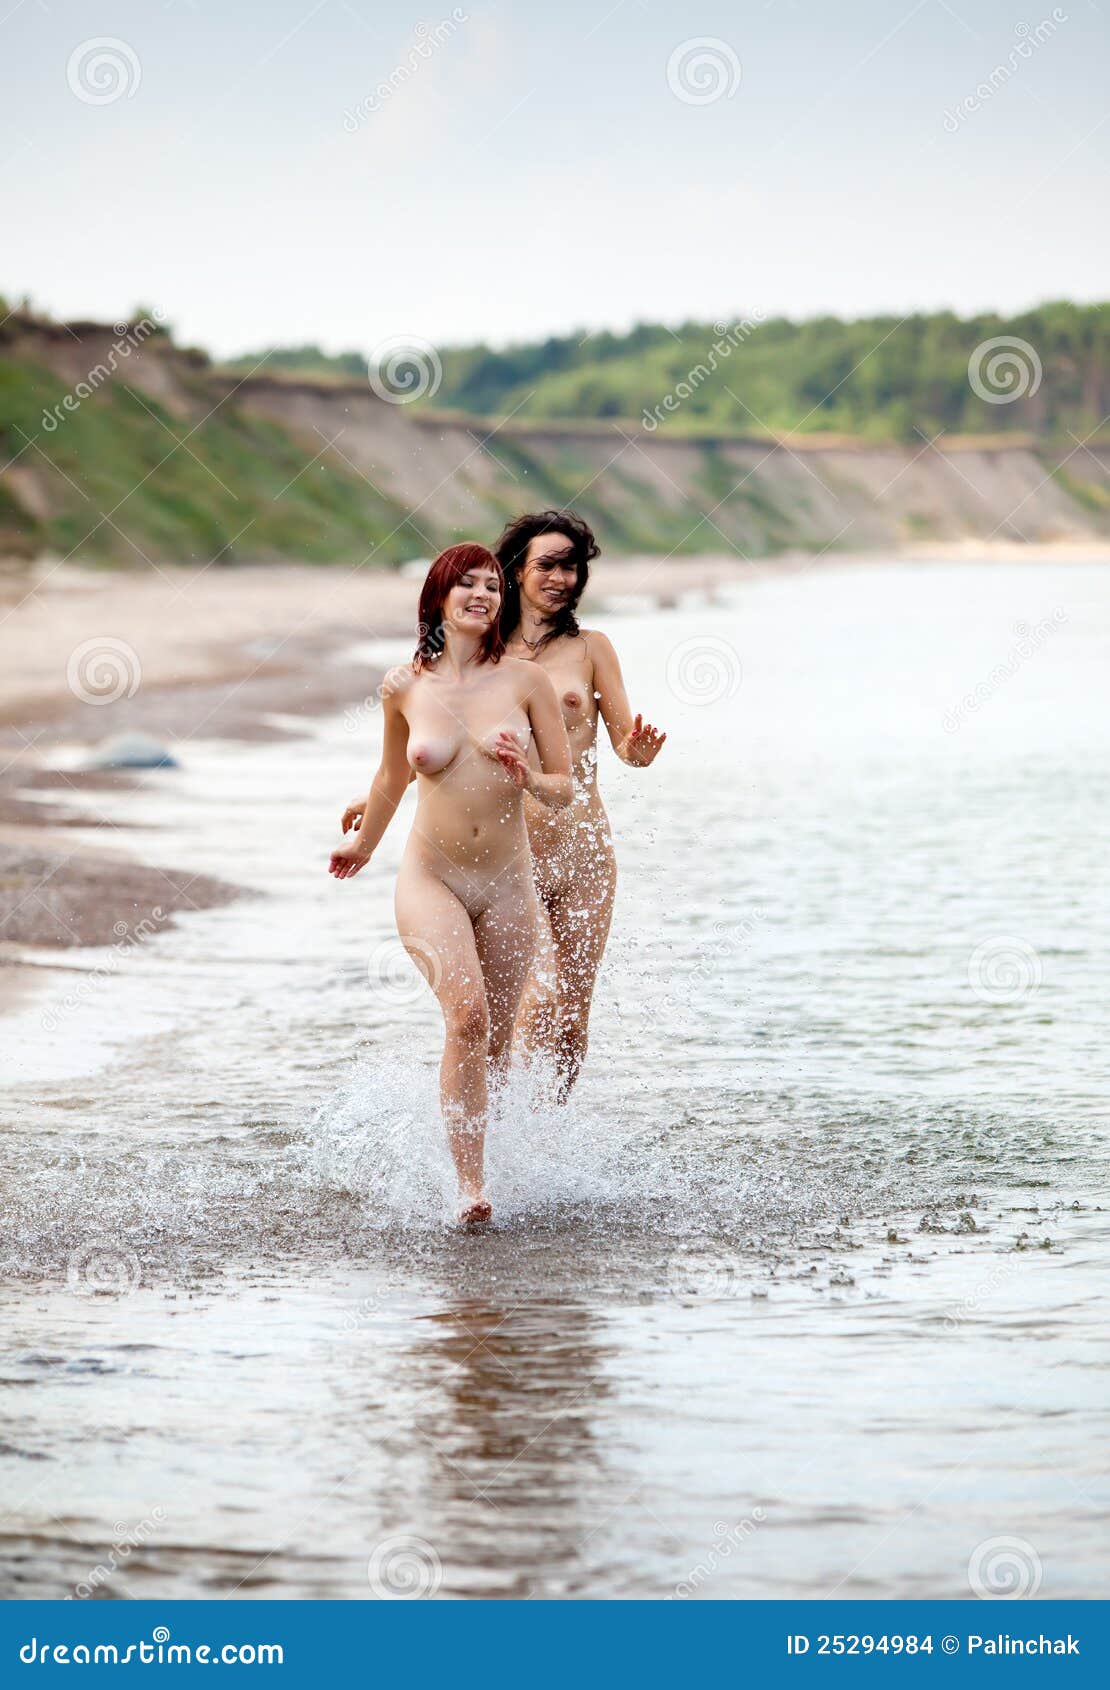 donna hurlbut harris recommends Naked Women Running